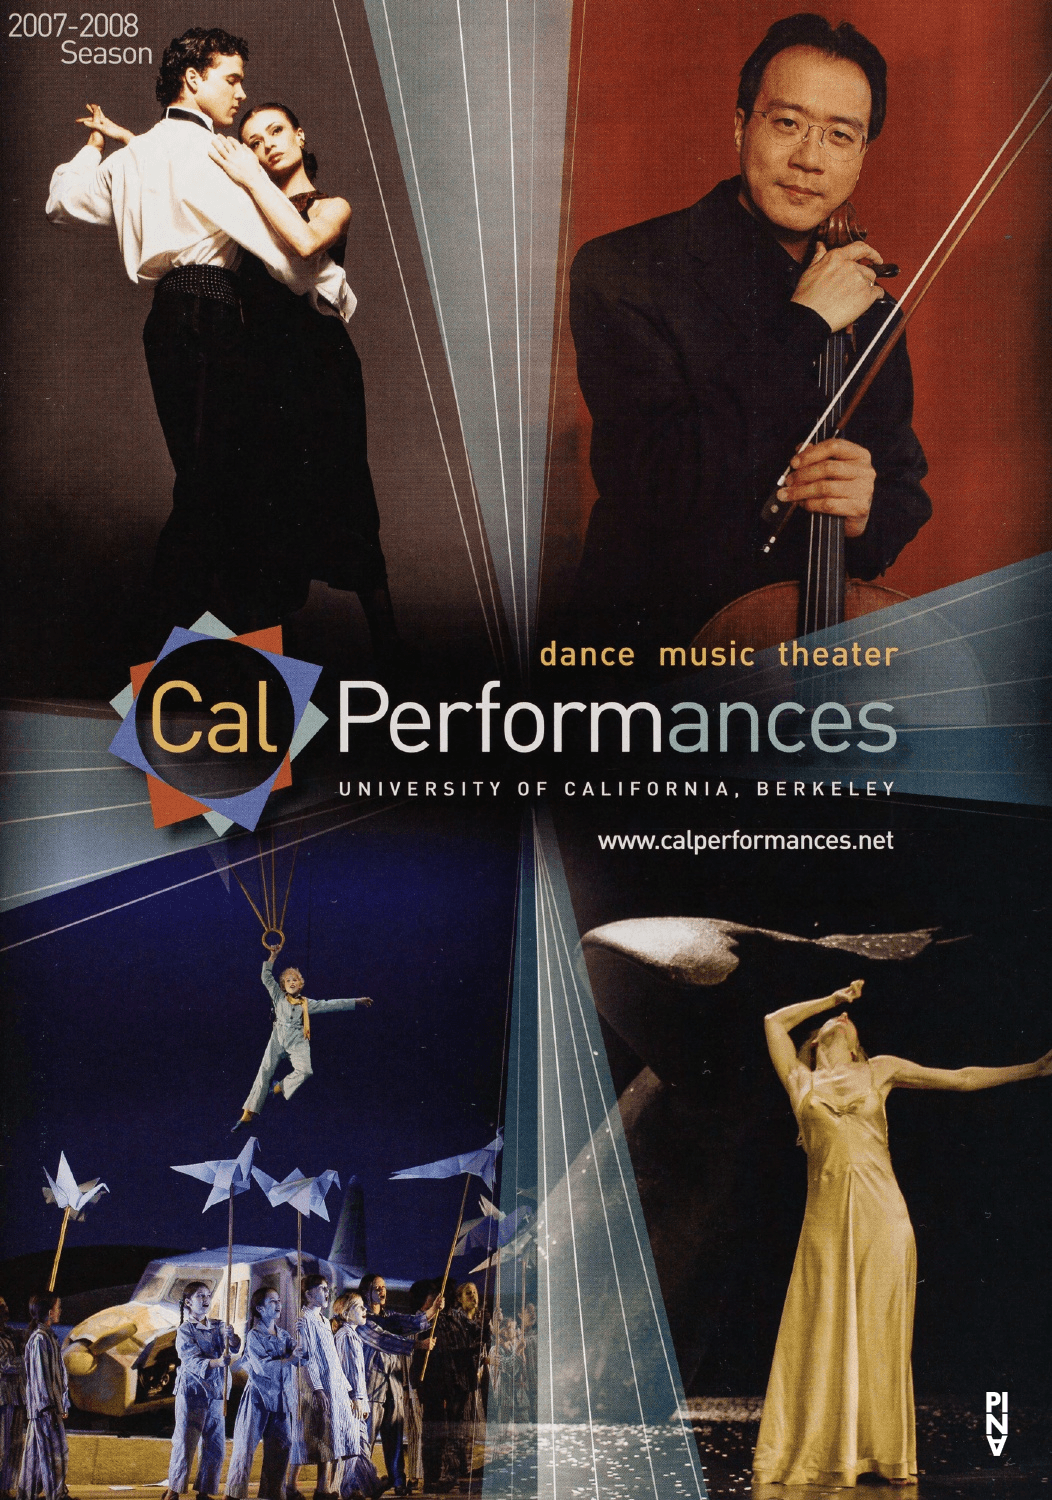 Programme de la saison pour « Ten Chi » de Pina Bausch avec Tanztheater Wuppertal à Berkeley, 16 nov. 2007 – 18 nov. 2007